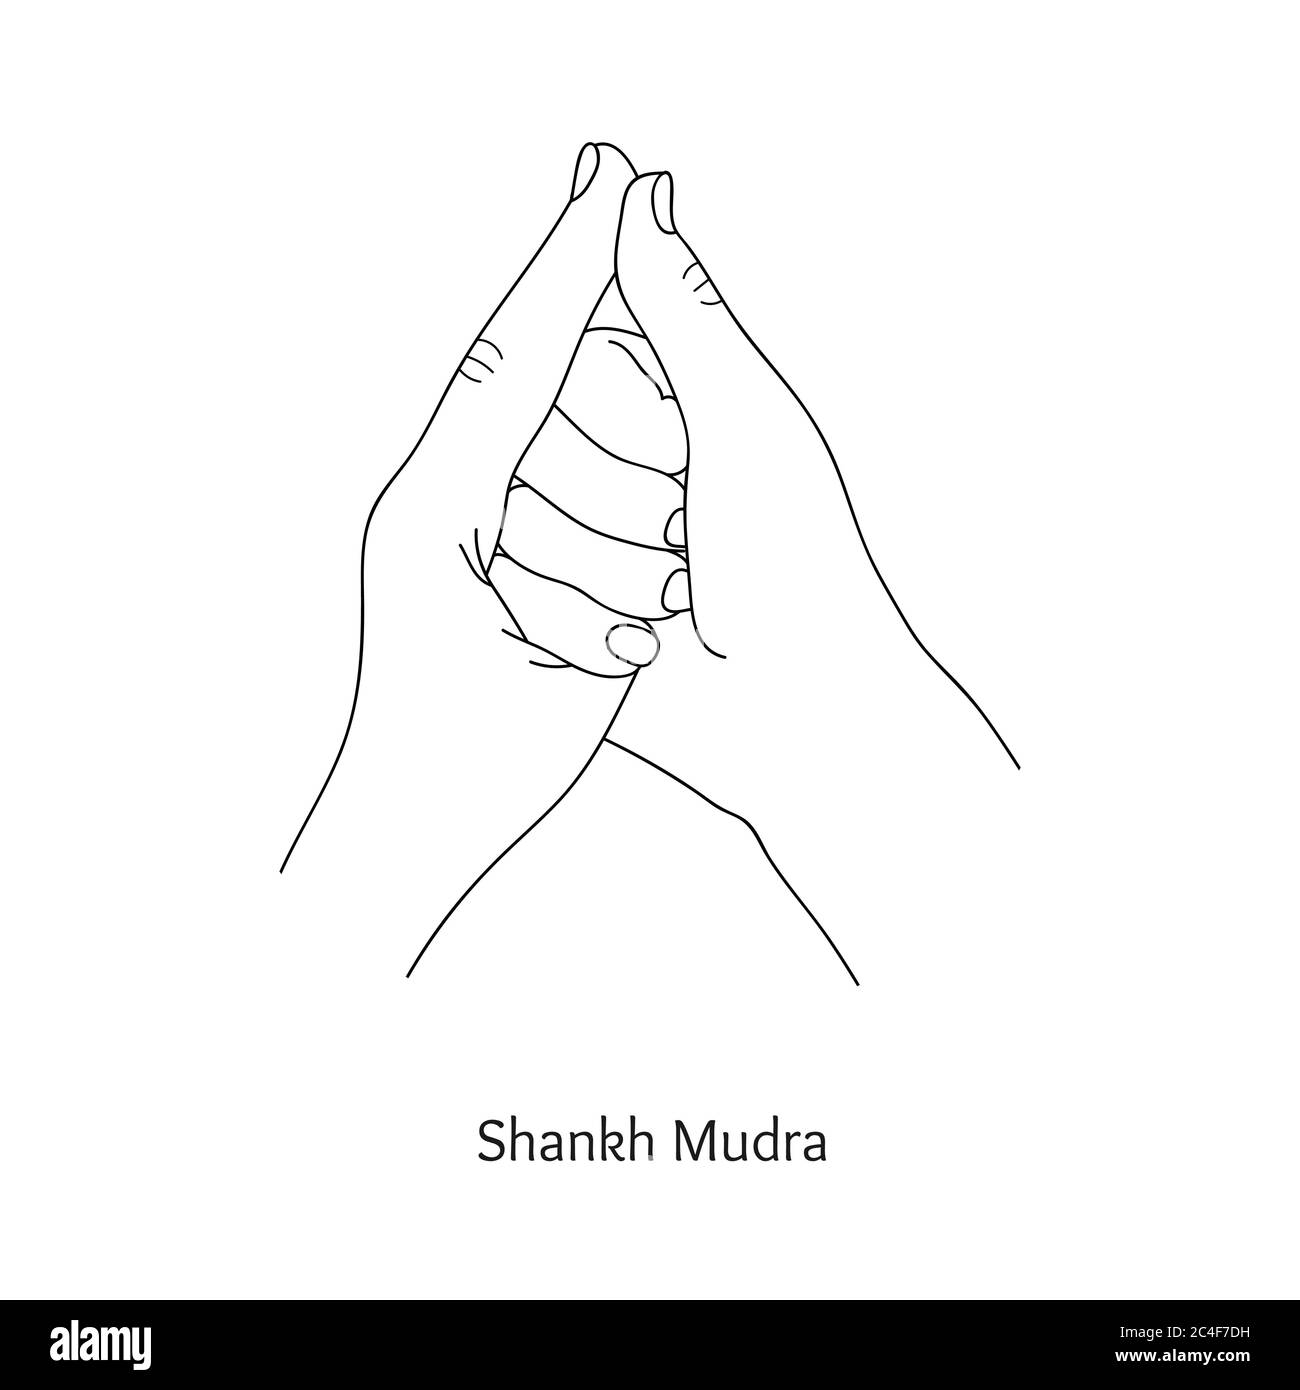 Shankh Mudra / Gesture of Shell. Vettore. Illustrazione Vettoriale